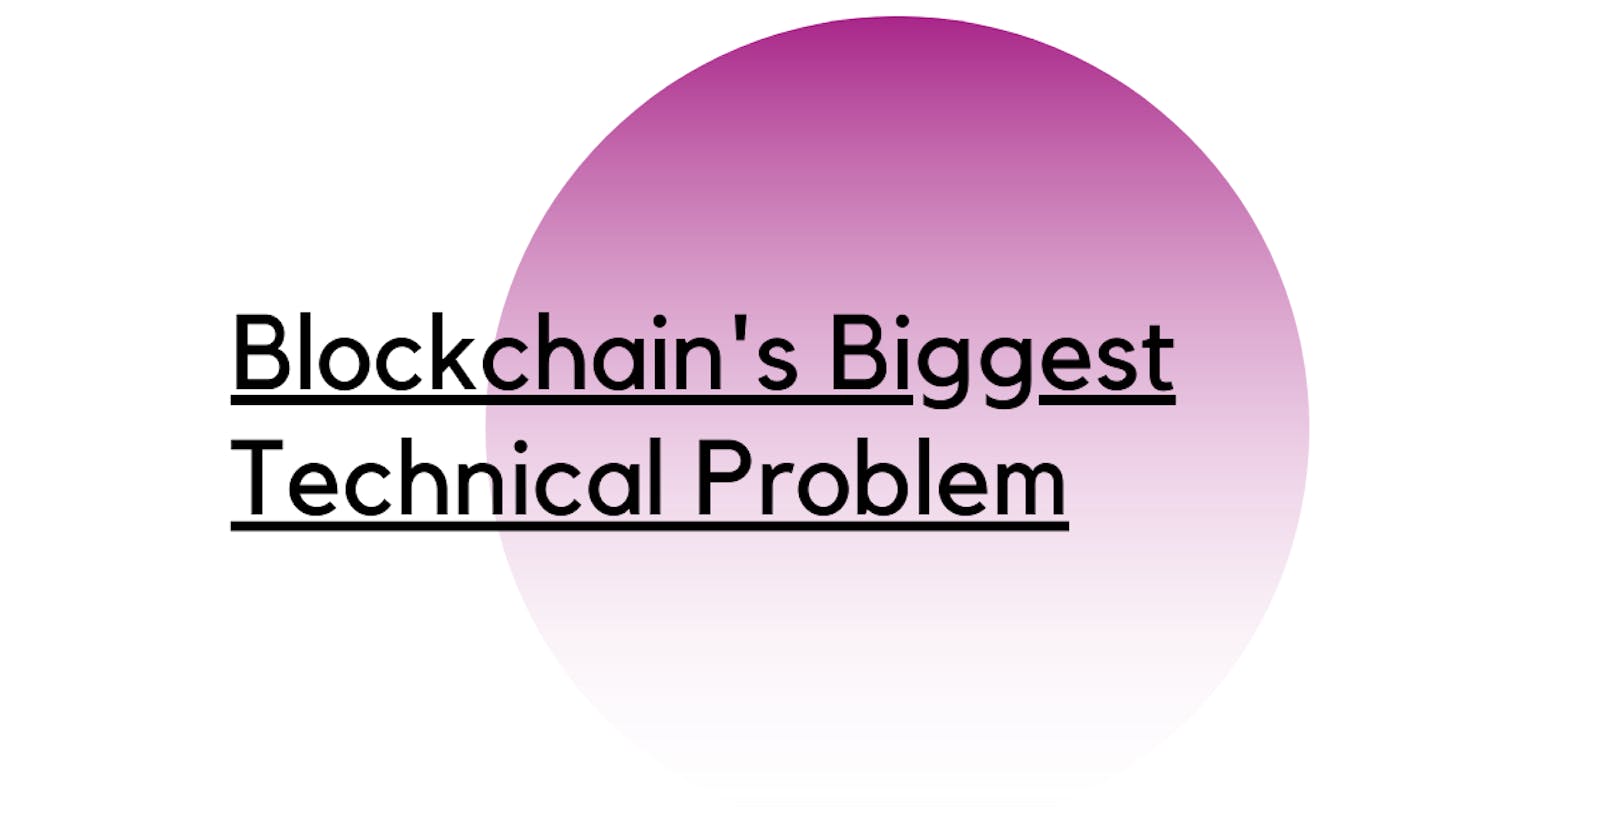 Blockchain's biggest technical challenge